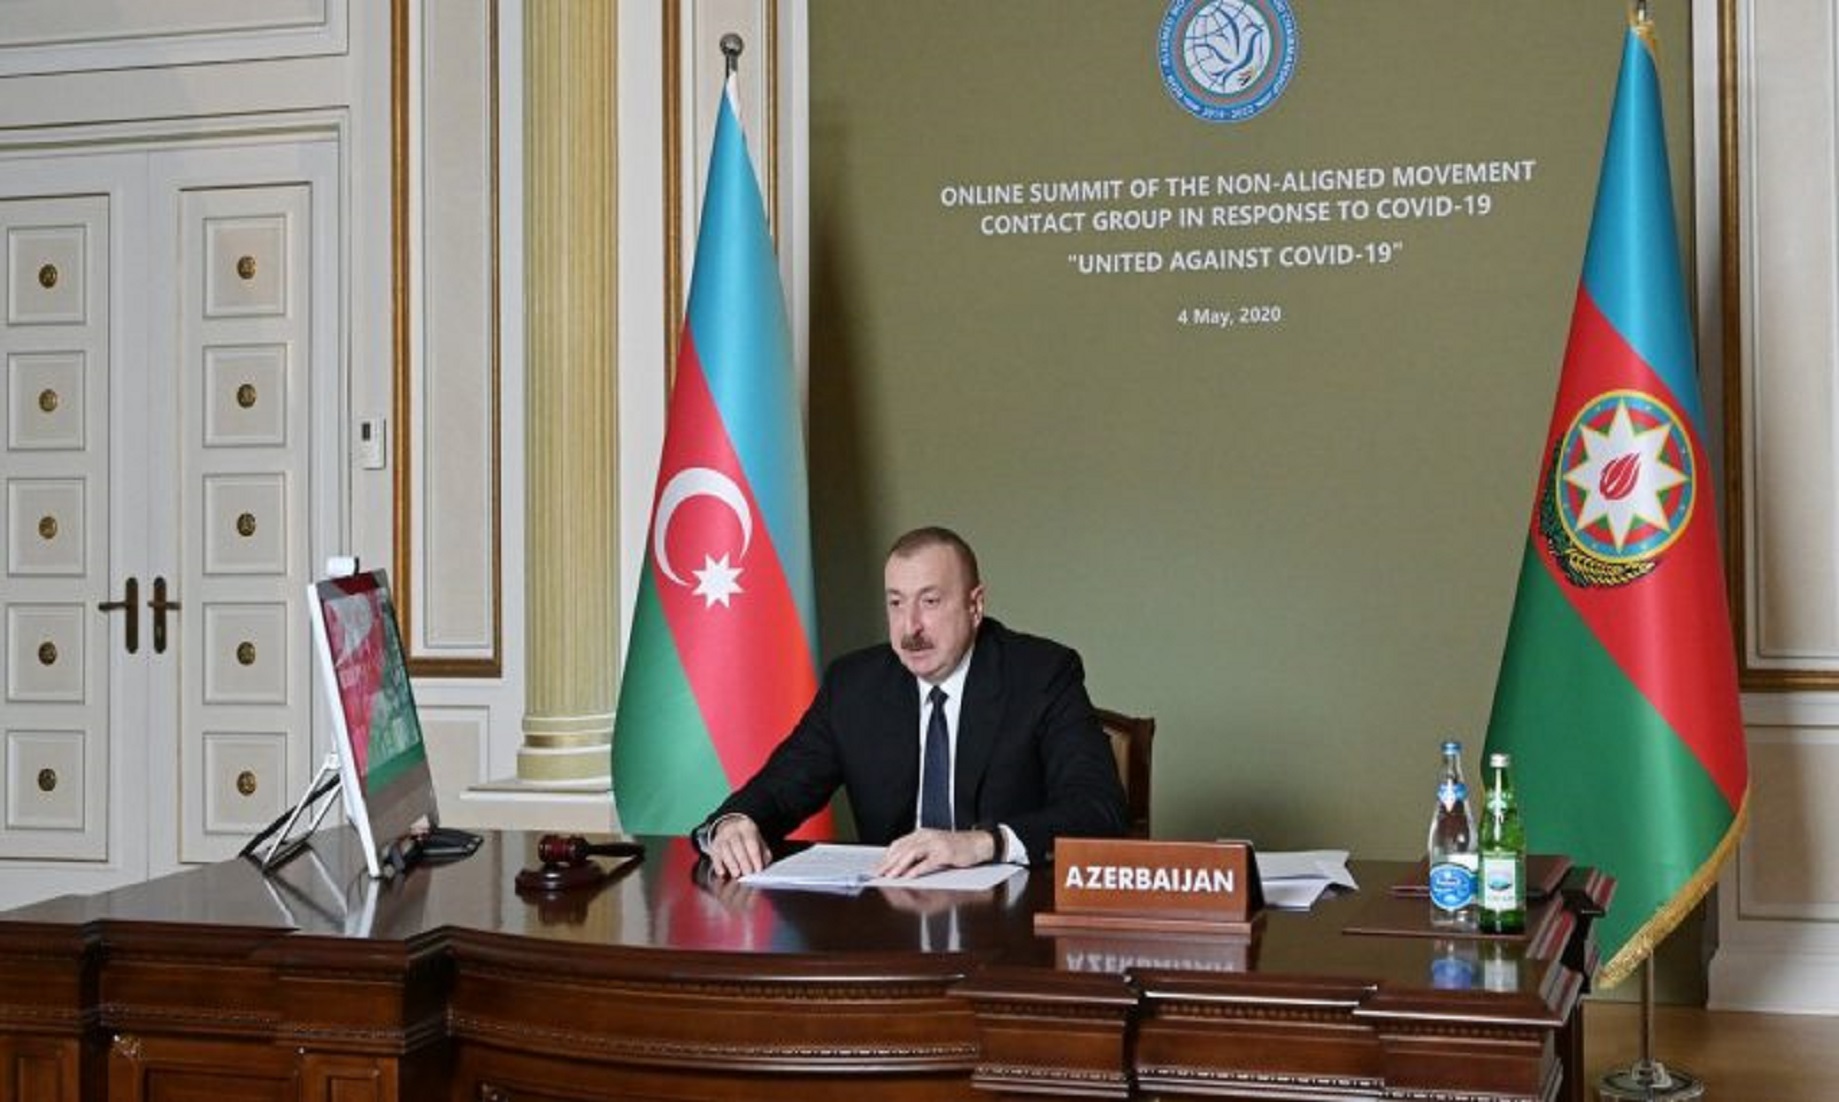 Azerbaijani President Reveals Plan On Non-Aligned Movement Office In New York